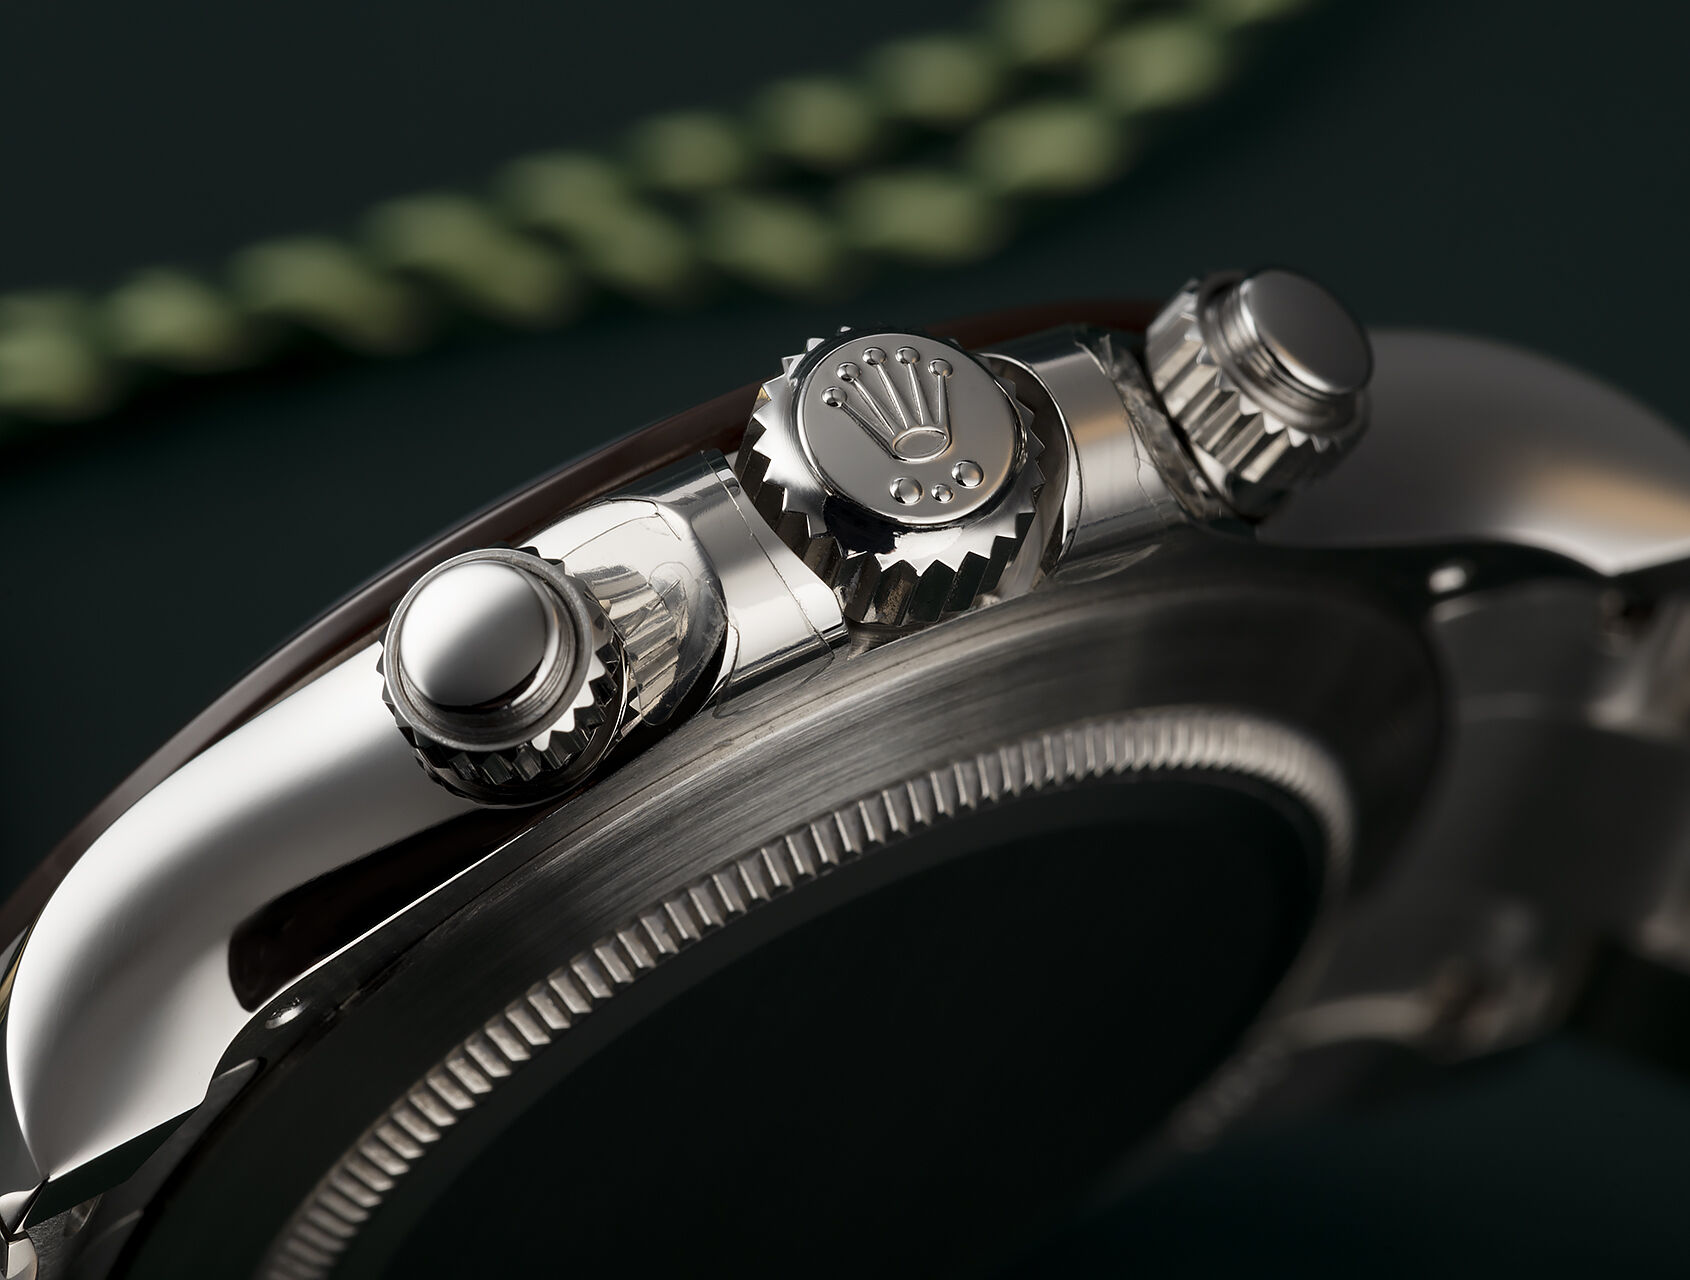 ref 116506 | 116506 - Final Production | Rolex Cosmograph Daytona